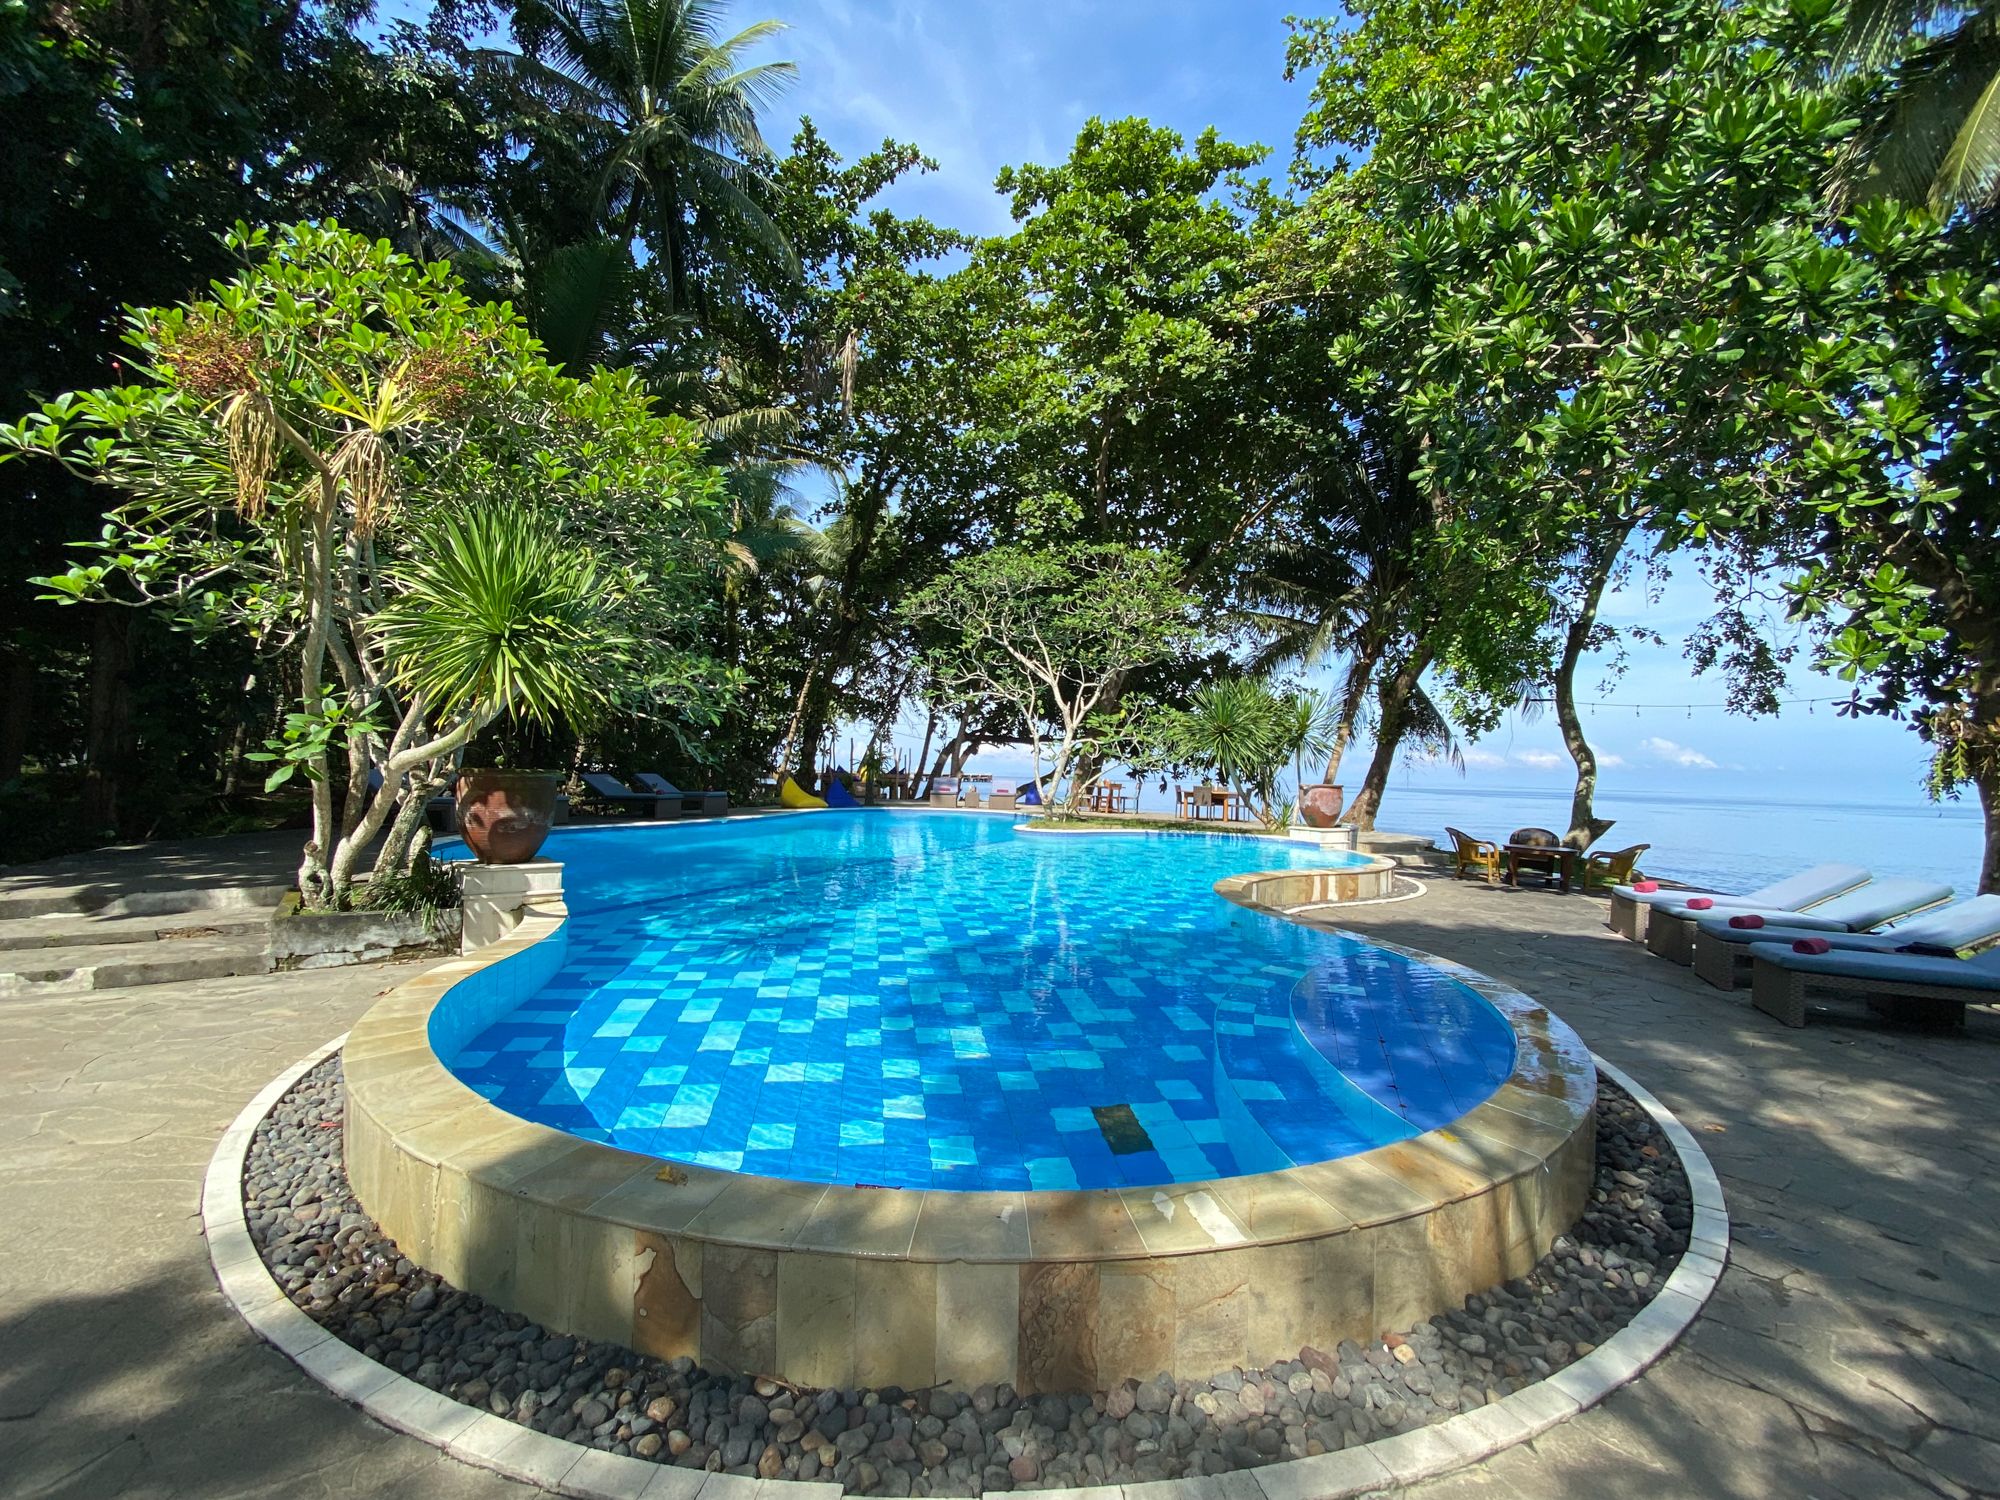 Manado Resort Pool View Over looking the Beach Area